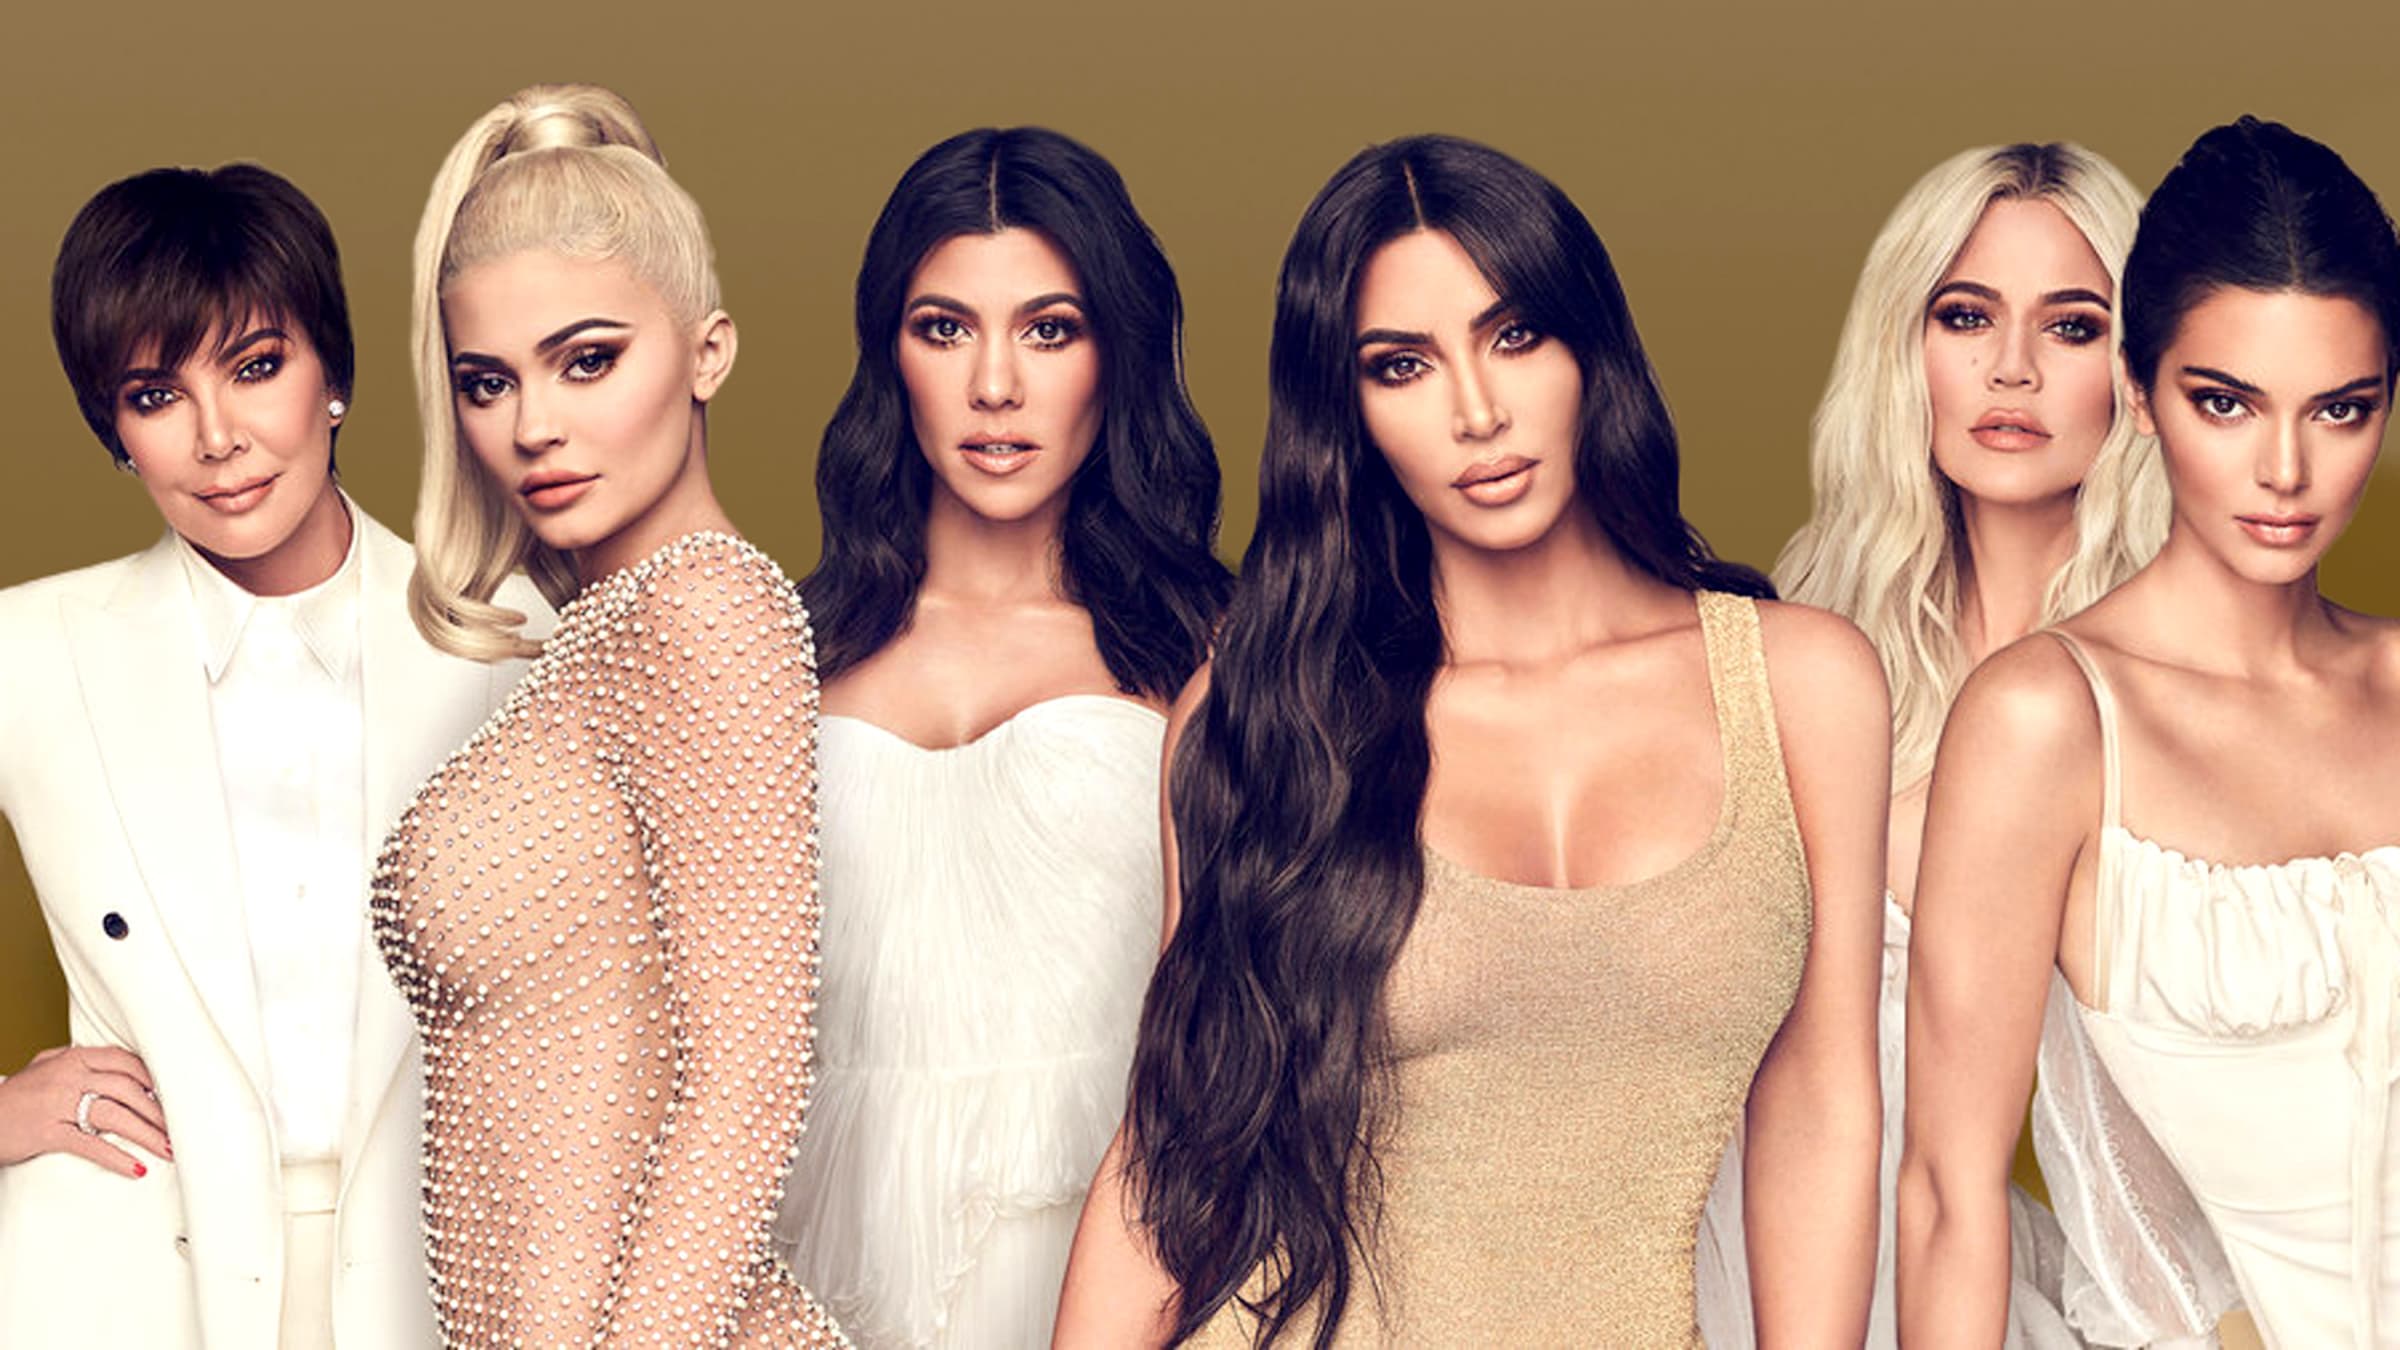 Kim Kardashian Alike - Why America Turned on the Kardashians